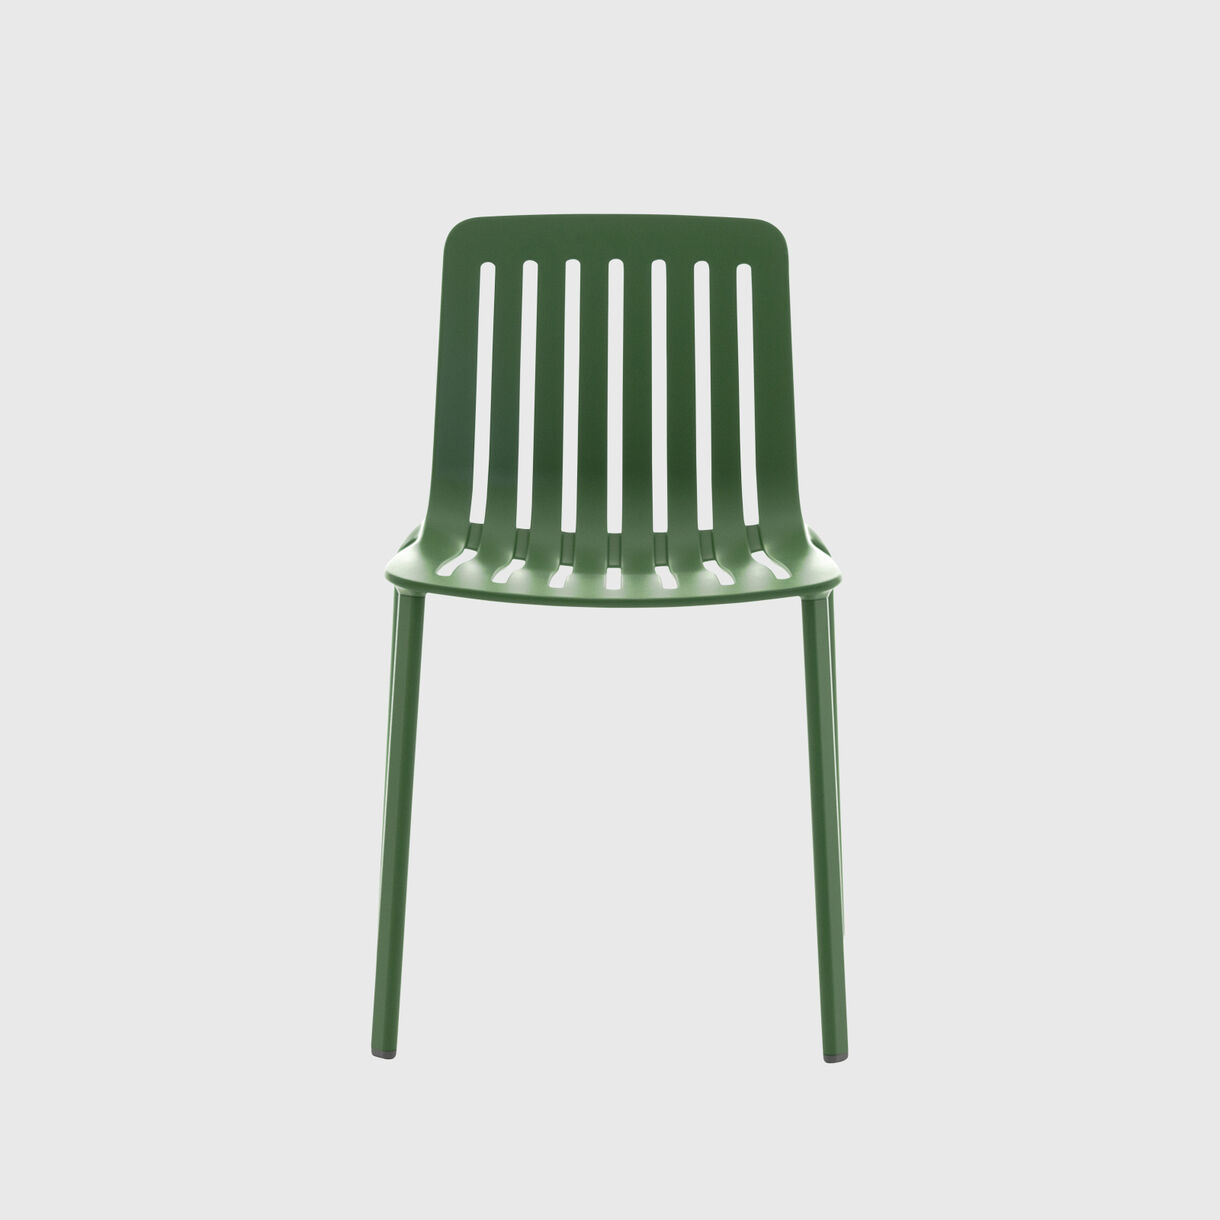 Plato Chair, Green